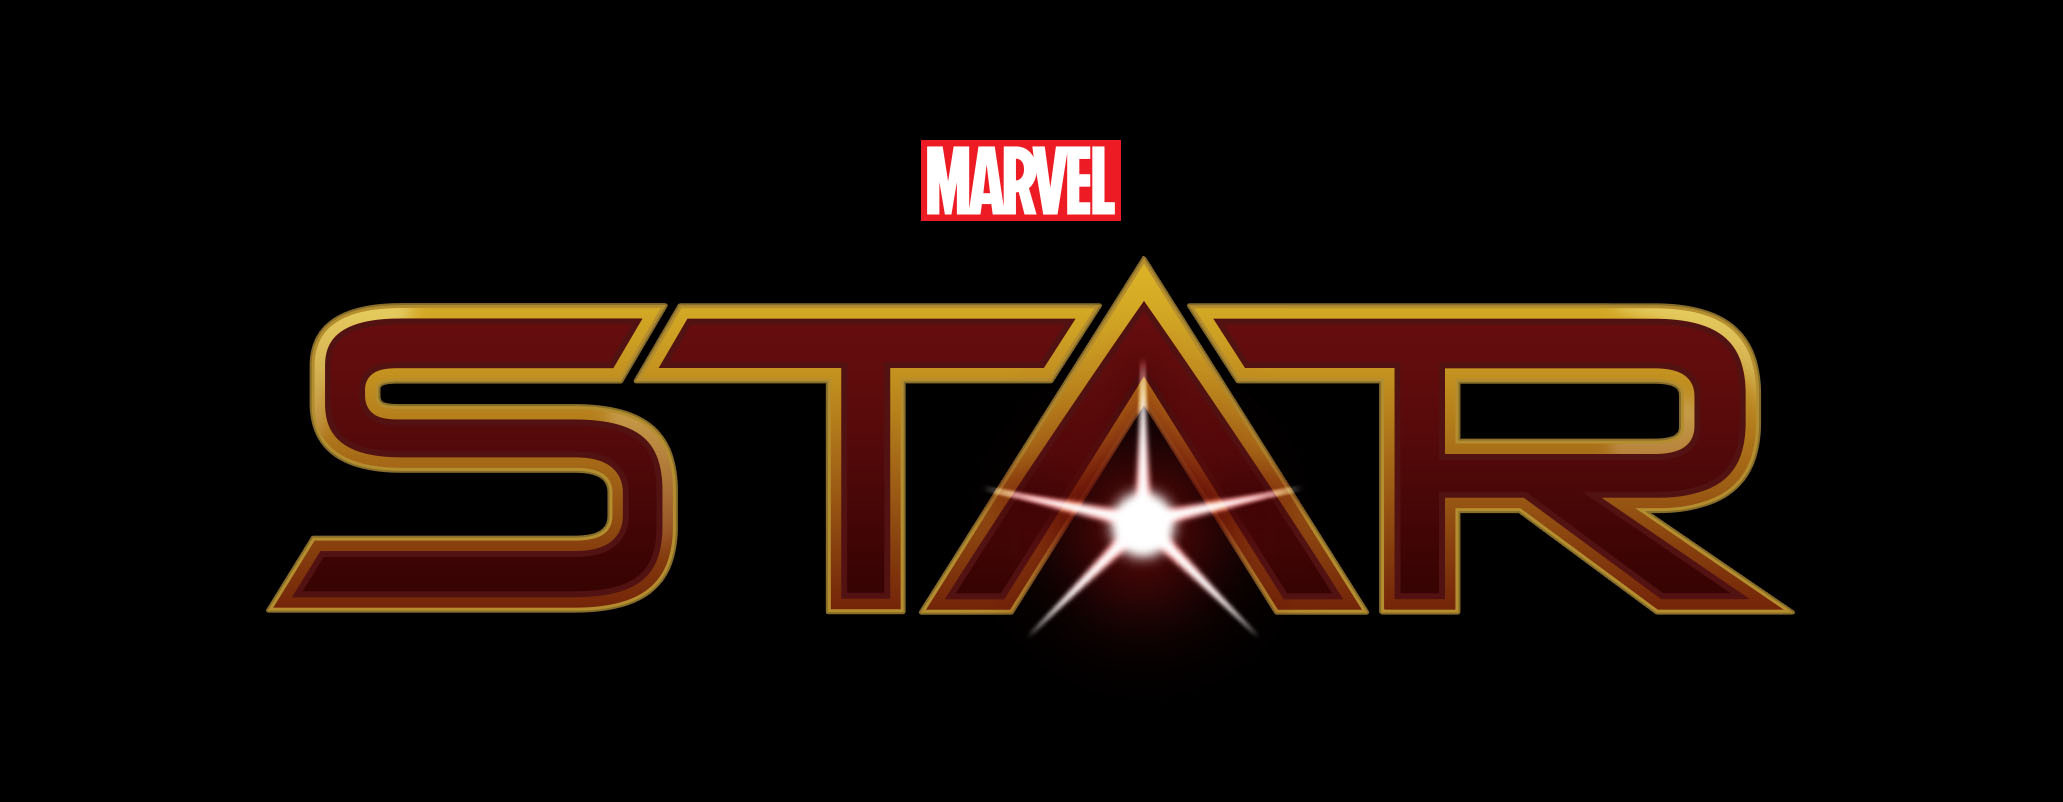 Marvel's Star Logo Design.  Published by Marvel Entertainment